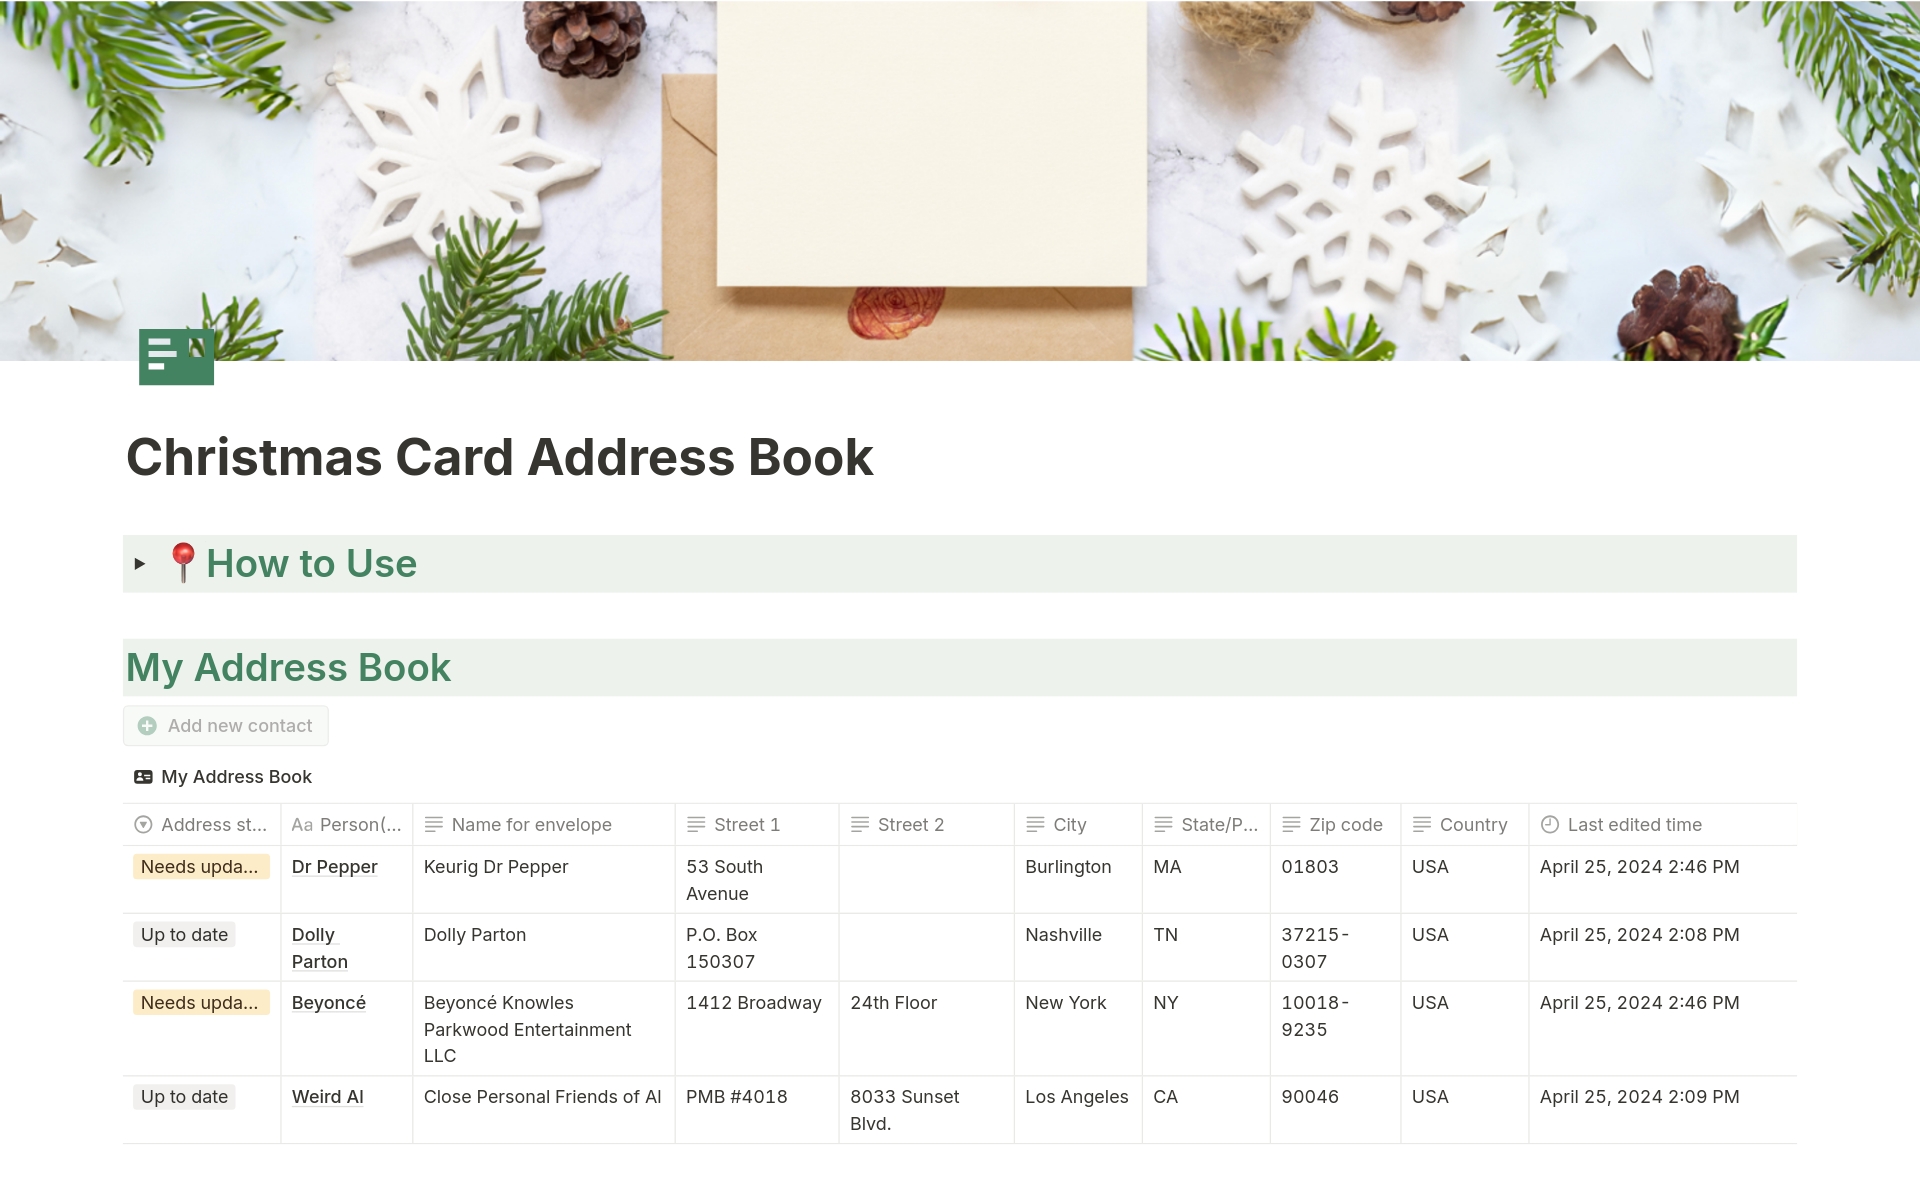 Aperçu du modèle de Christmas Card Address Book